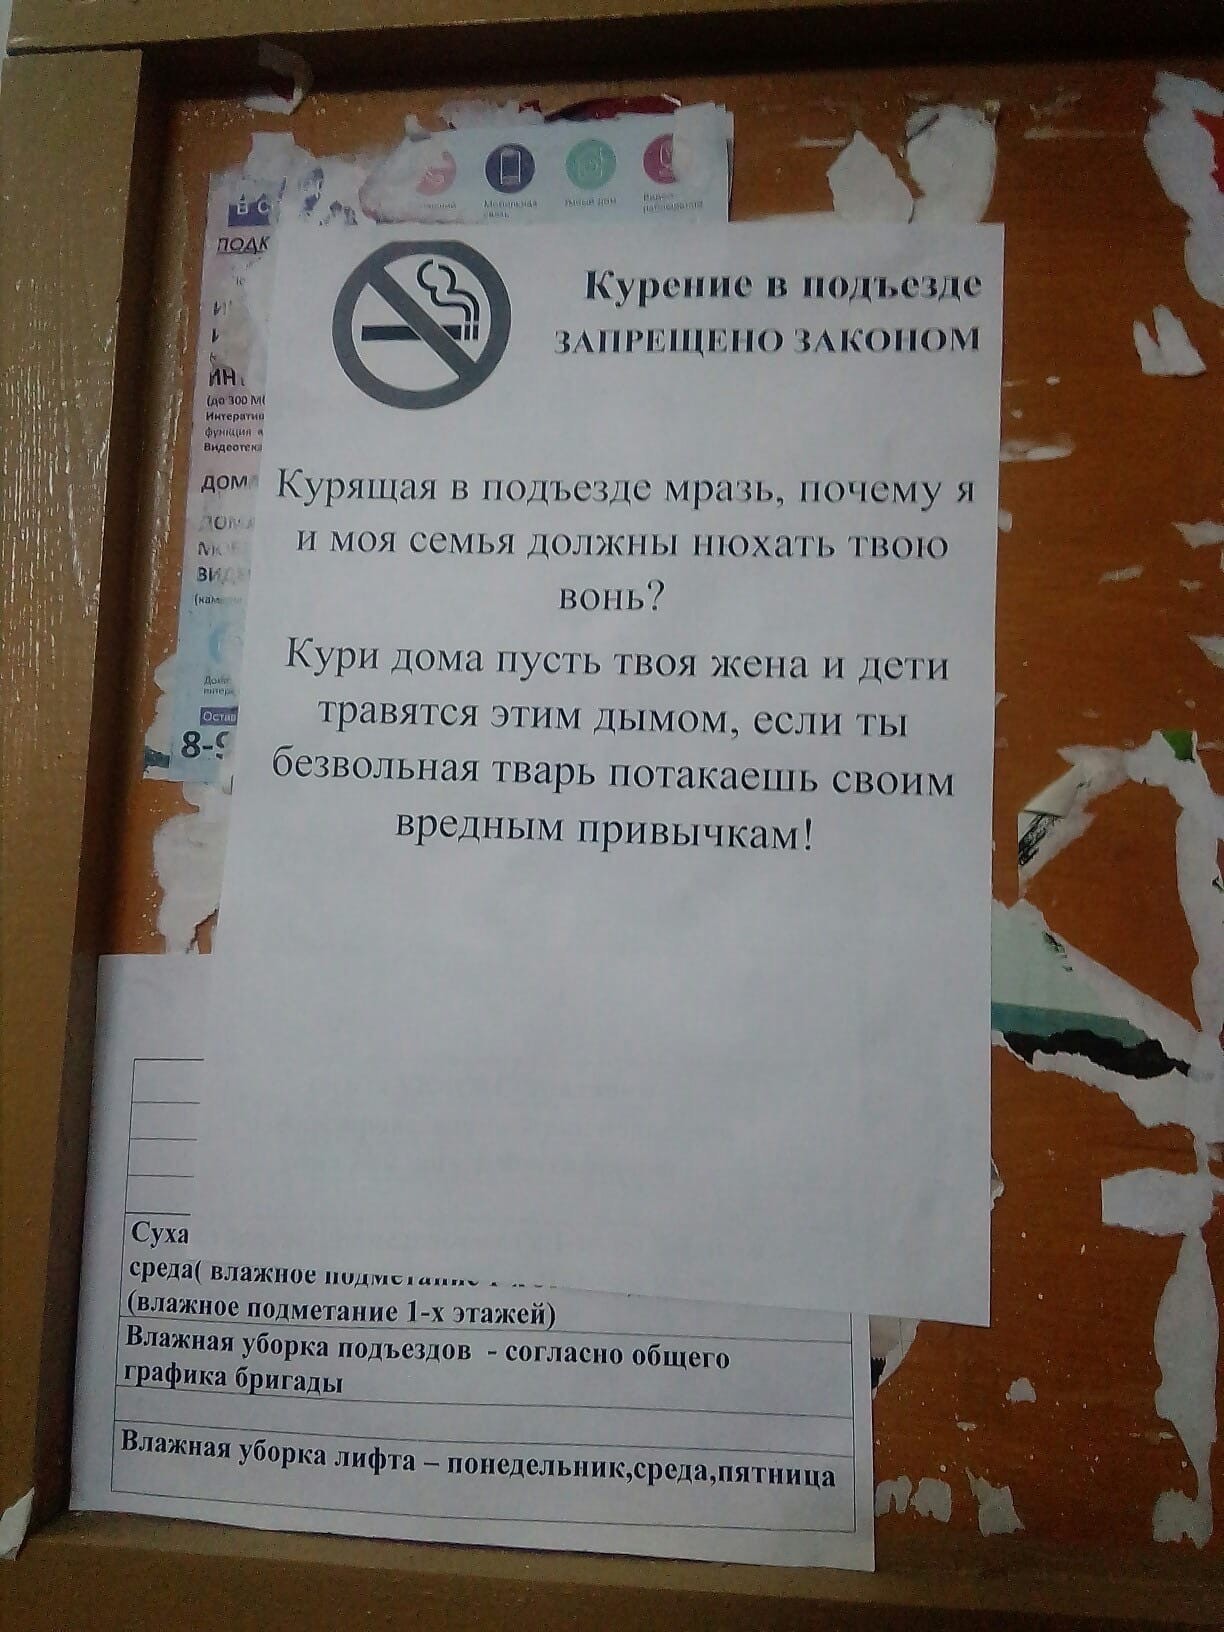 Соседи курят воняет. Объявления в подъезде. Обращение к курящим соседям в подъезде. Объявление не курить в подъезде. Объявление для курильщиков в подъезде.